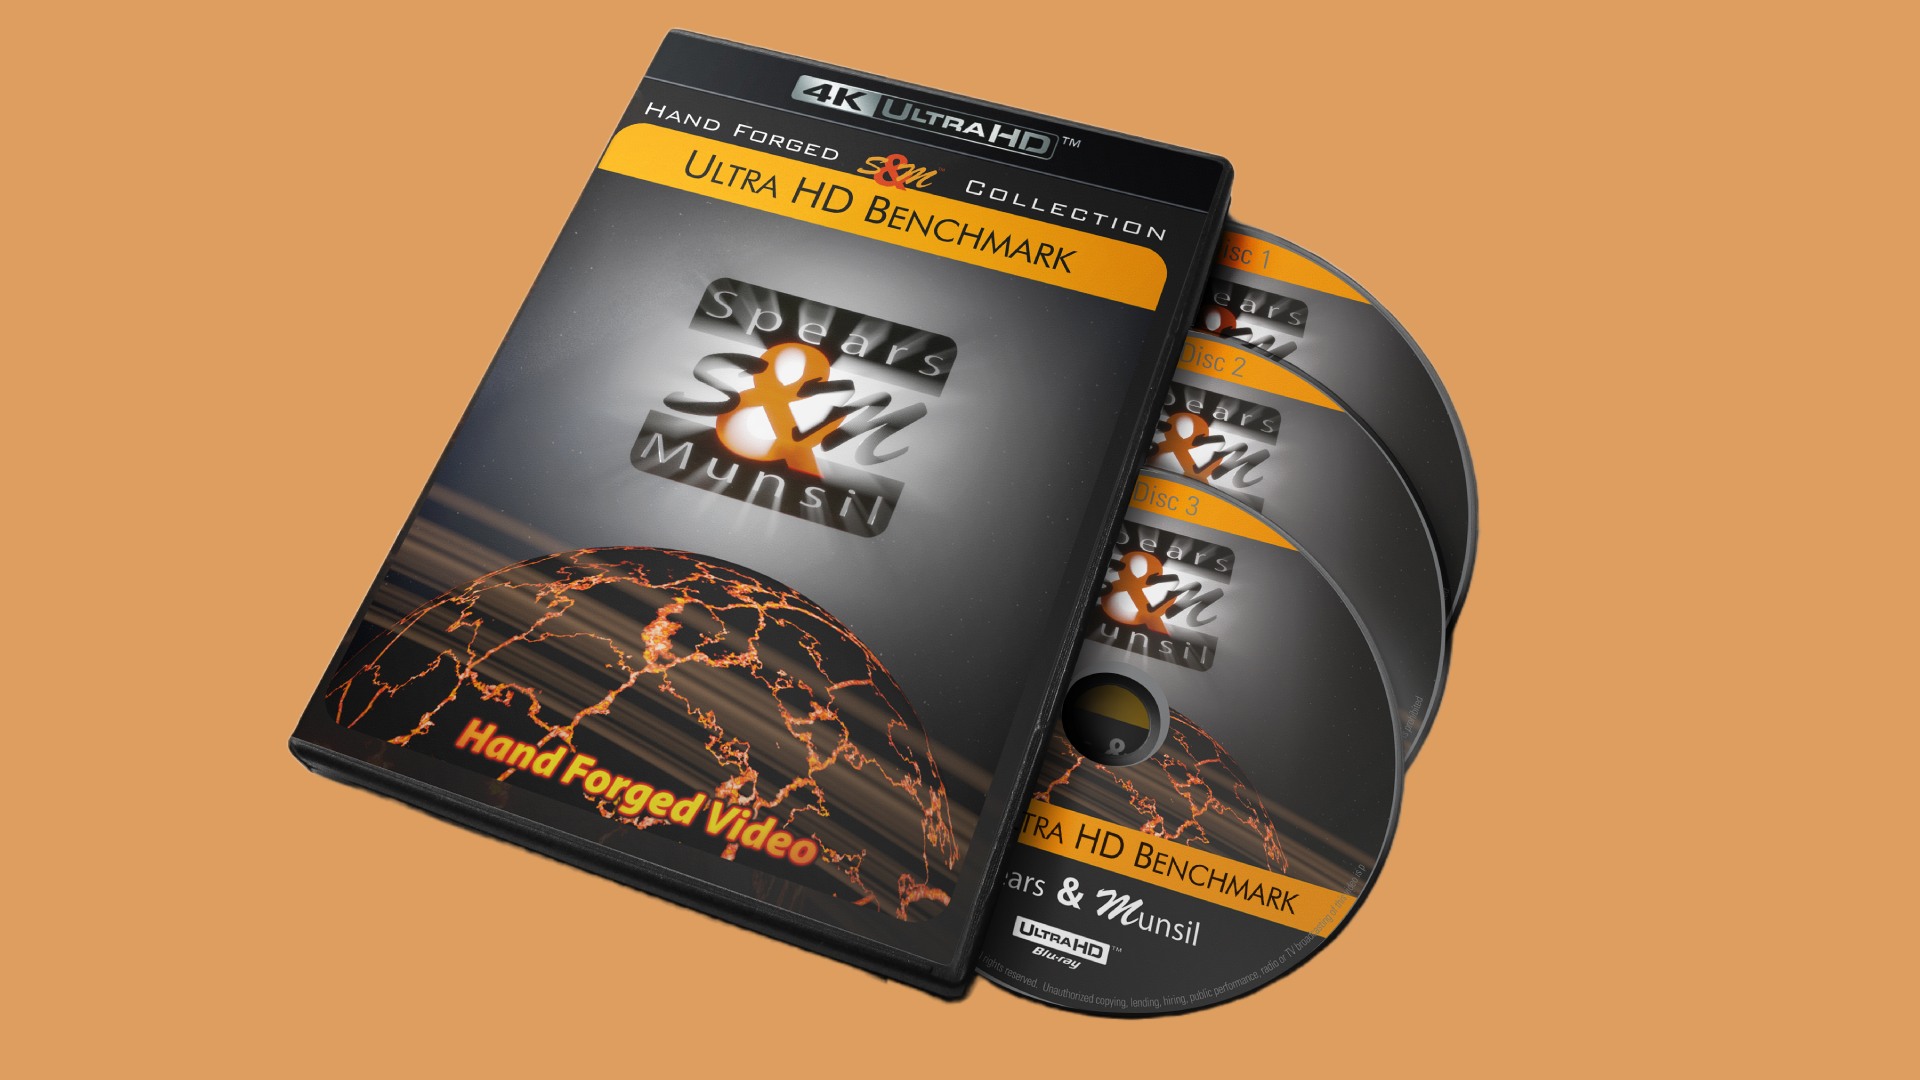 65 [New 4K UHD Blu-ray] With Blu-Ray, 4K Mastering, Digital Copy